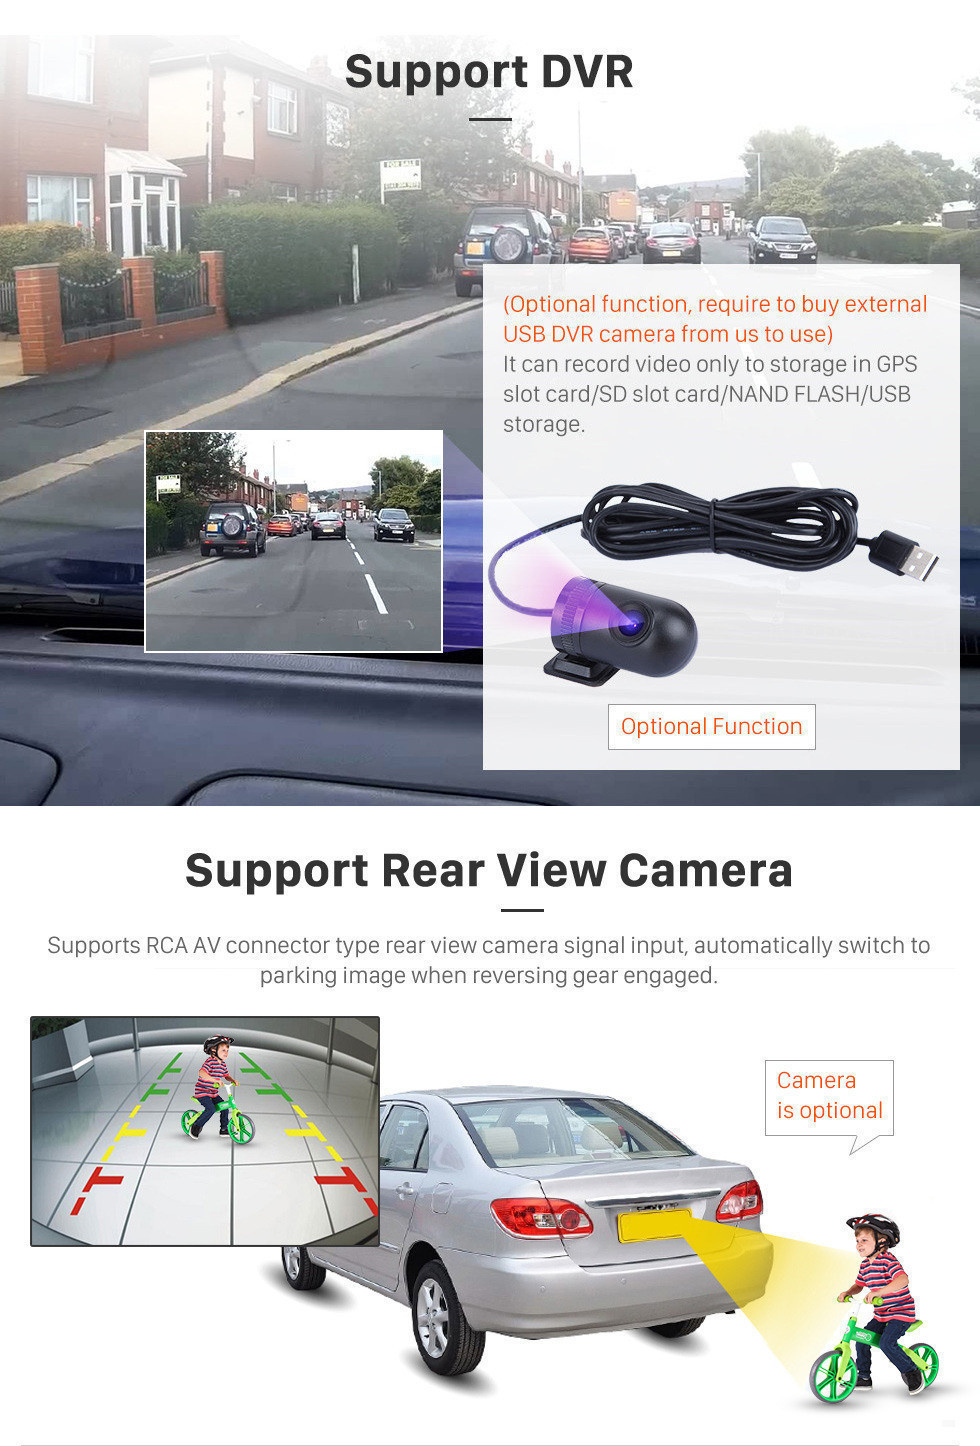 Seicane 9 pouces HD écran tactile 2018 2019 Suzuki ERTIGA Android 11.0 Radio avec système de navigation GPS WIFI USB Bluetooth Mirror Link support de caméra de recul DVR 1080p Lecteur DVD TPMS